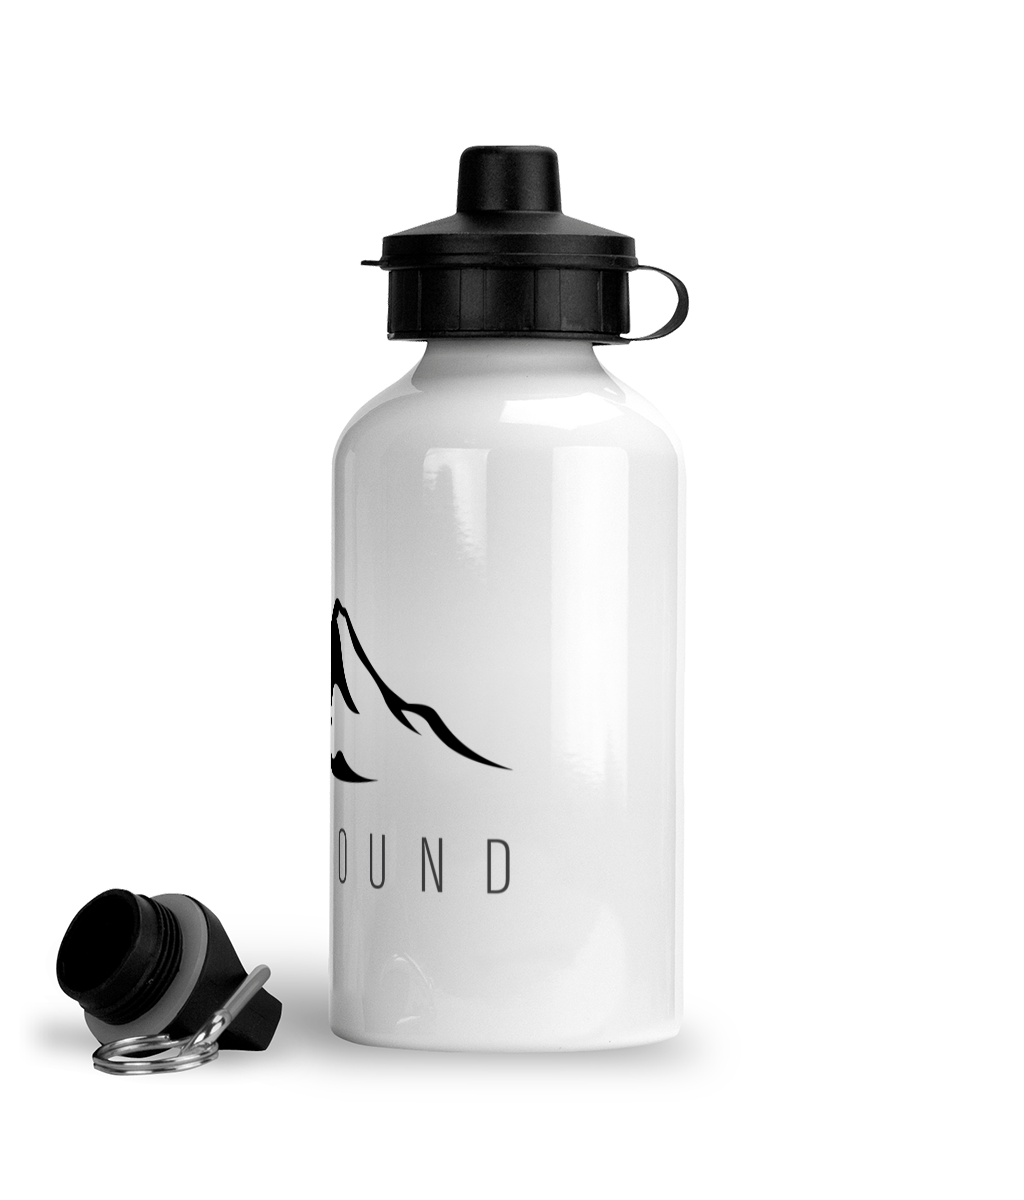 Hillbound Aluminium Sports Water Bottle